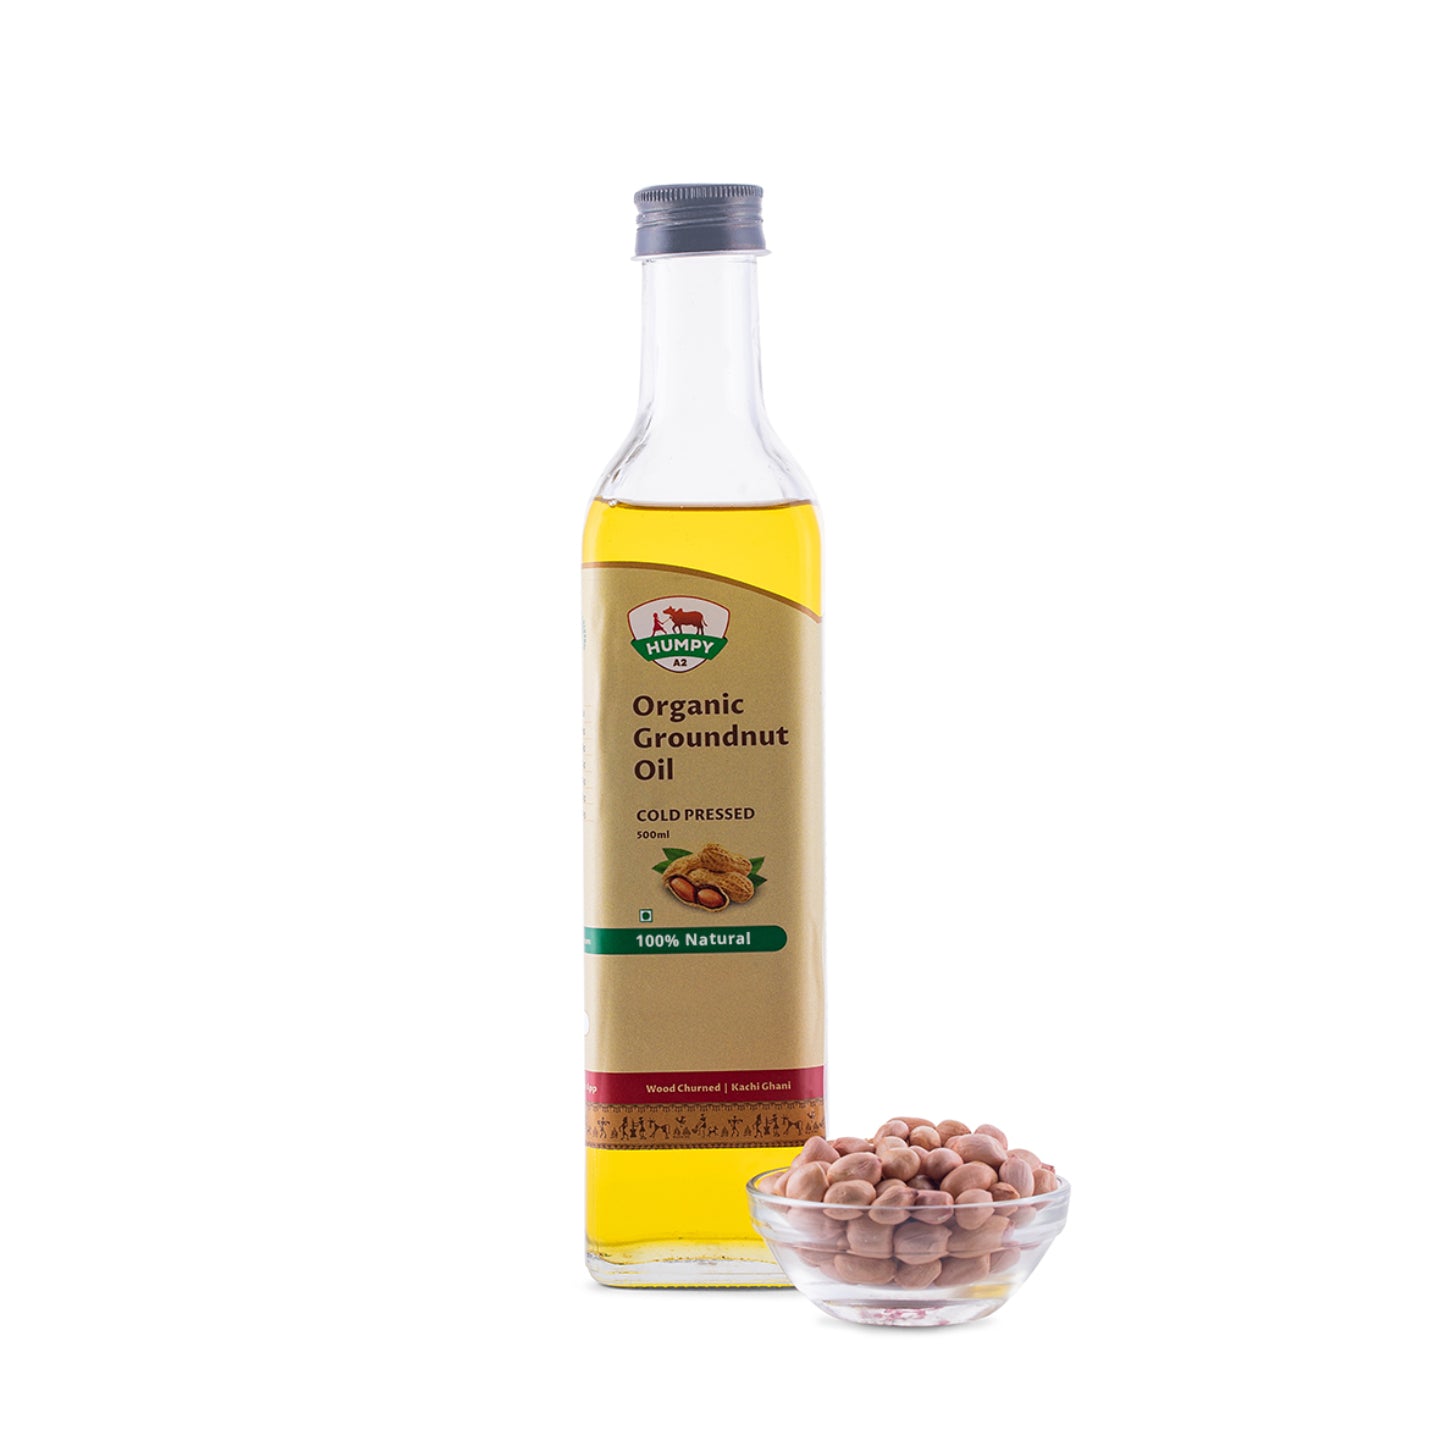 Organic Groundnut Oil